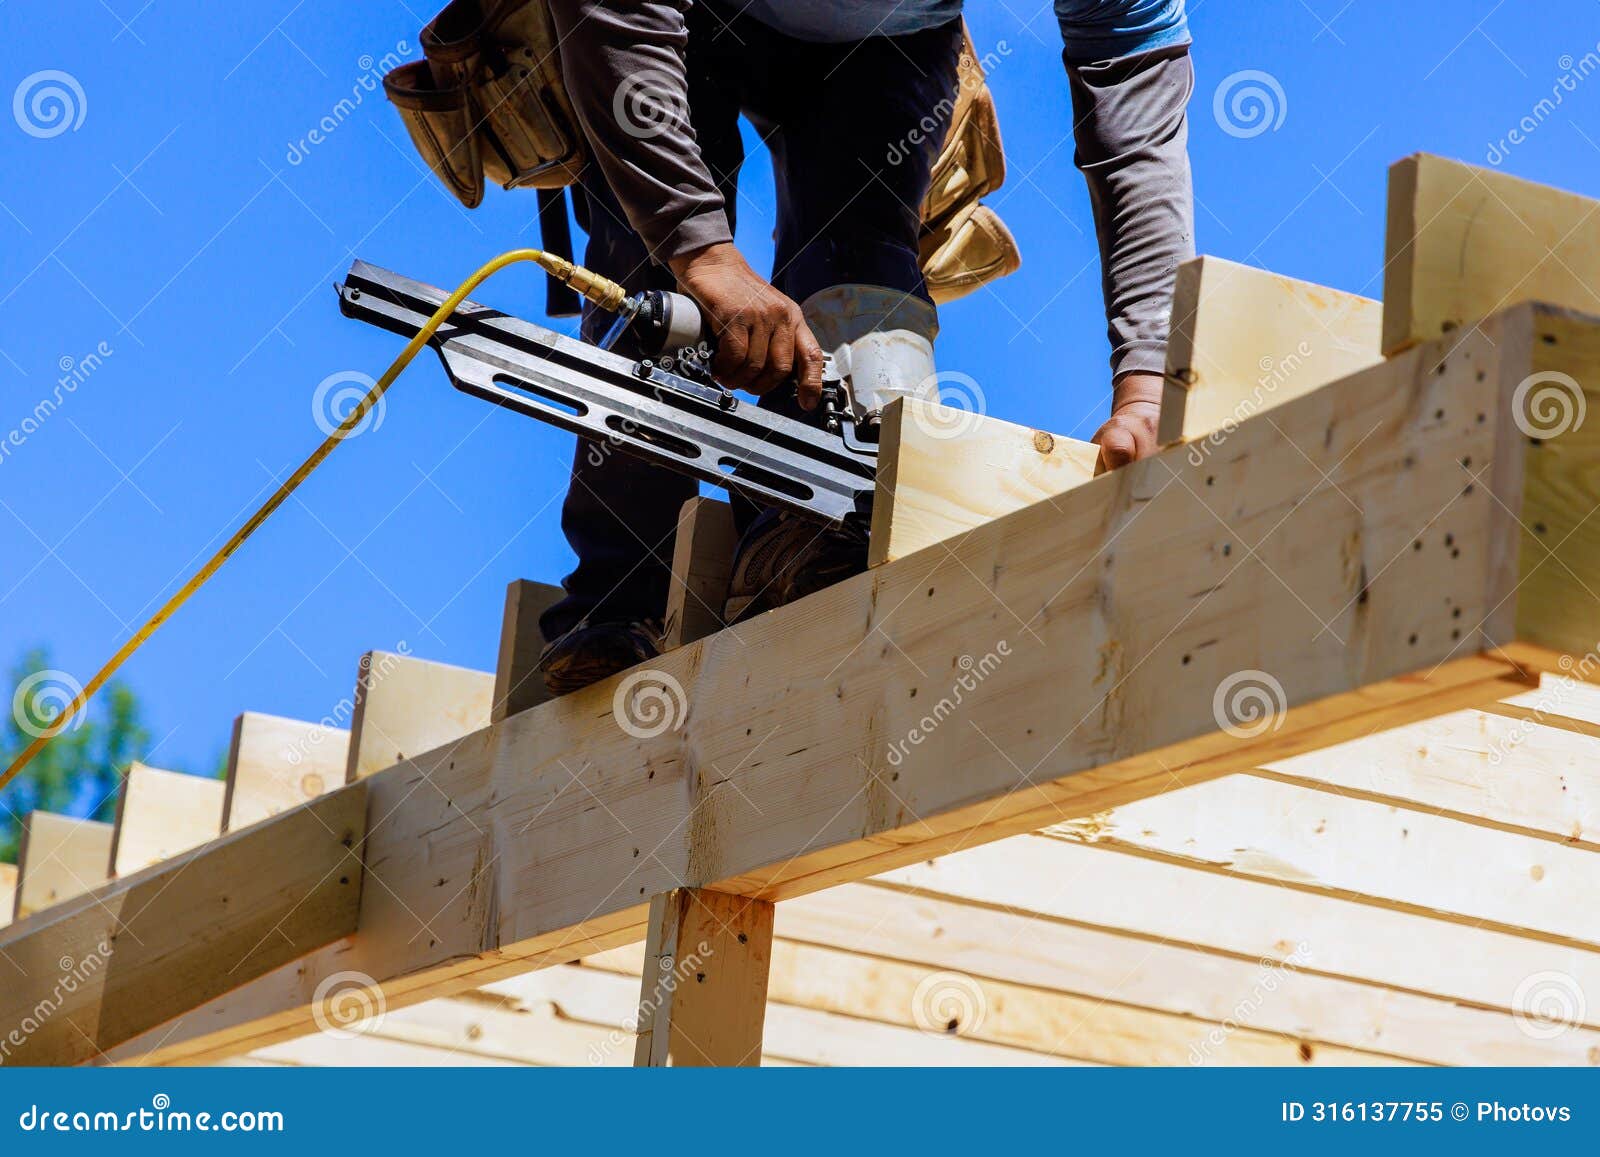 framer worker installing beams using air nails hammer in a nailing wooden frame